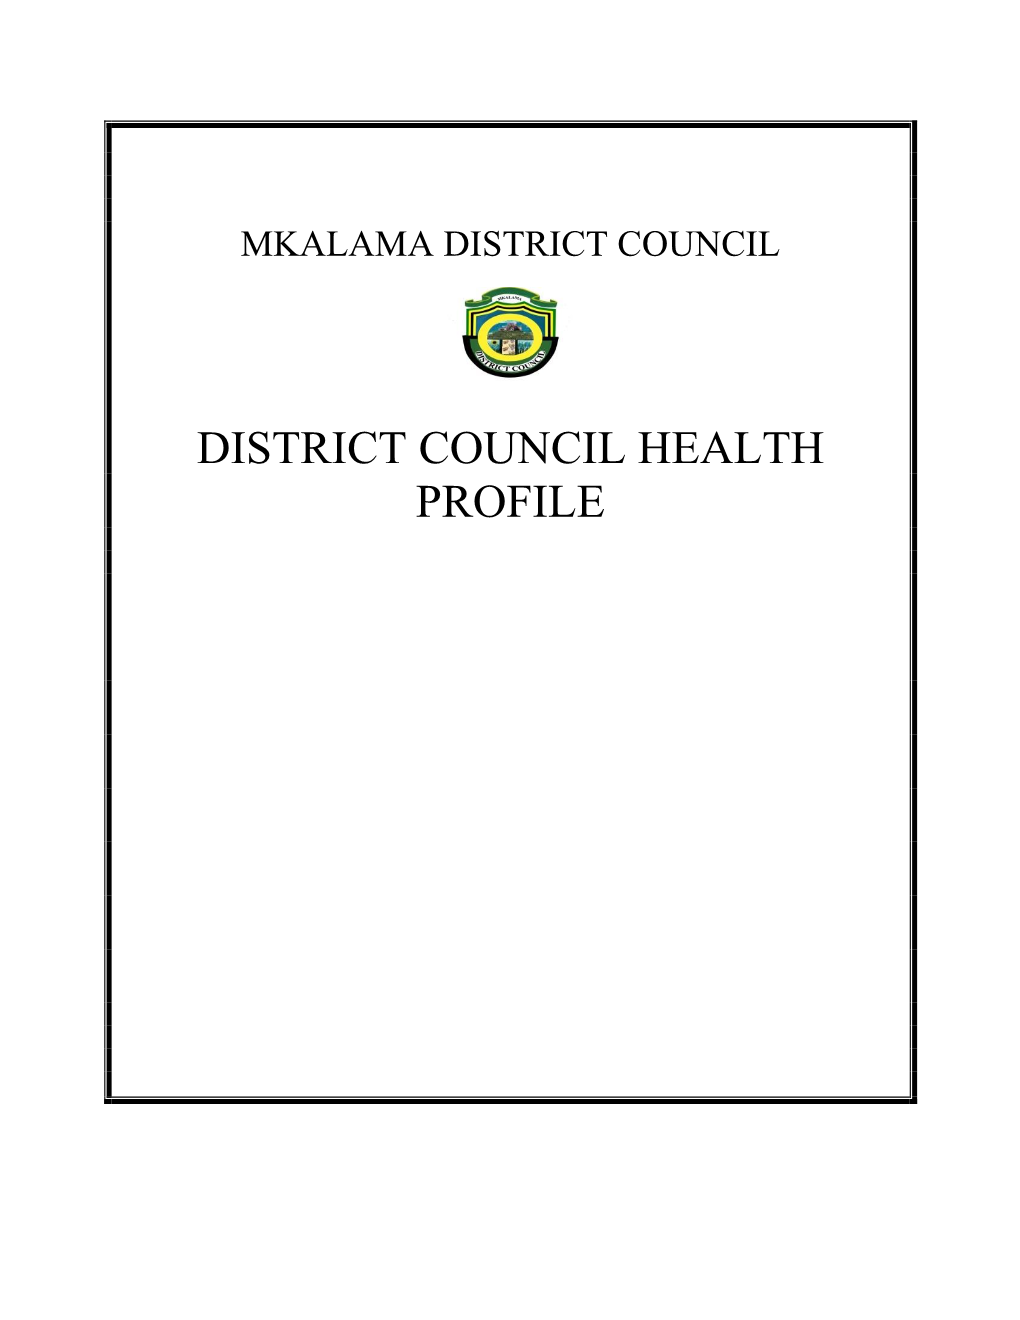 District Council Health Profile